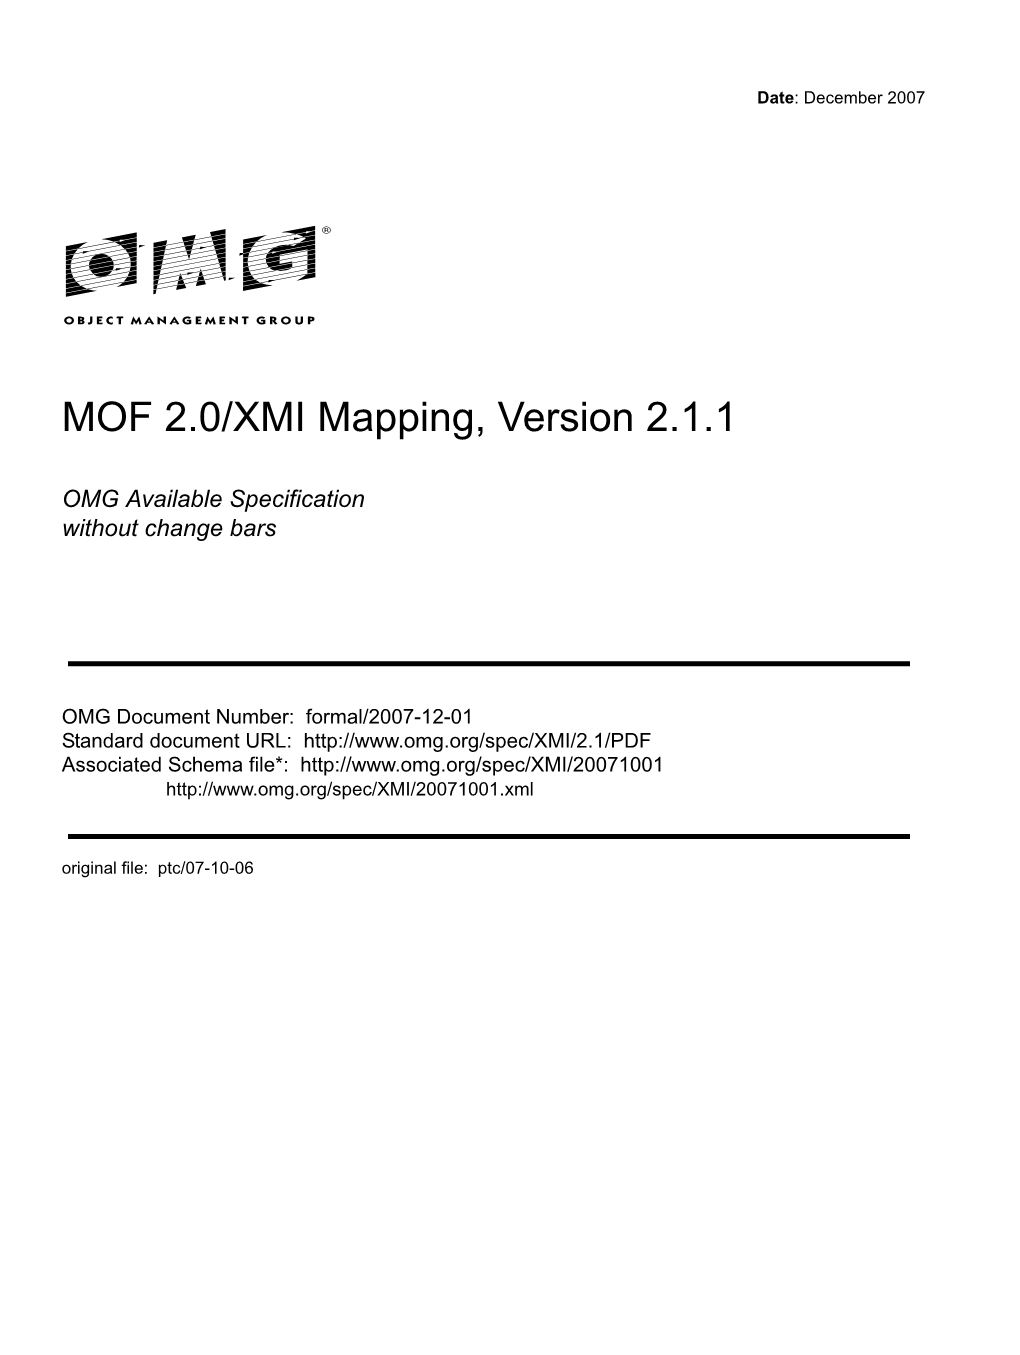 MOF 2.0/XMI Mapping, Version 2.1.1